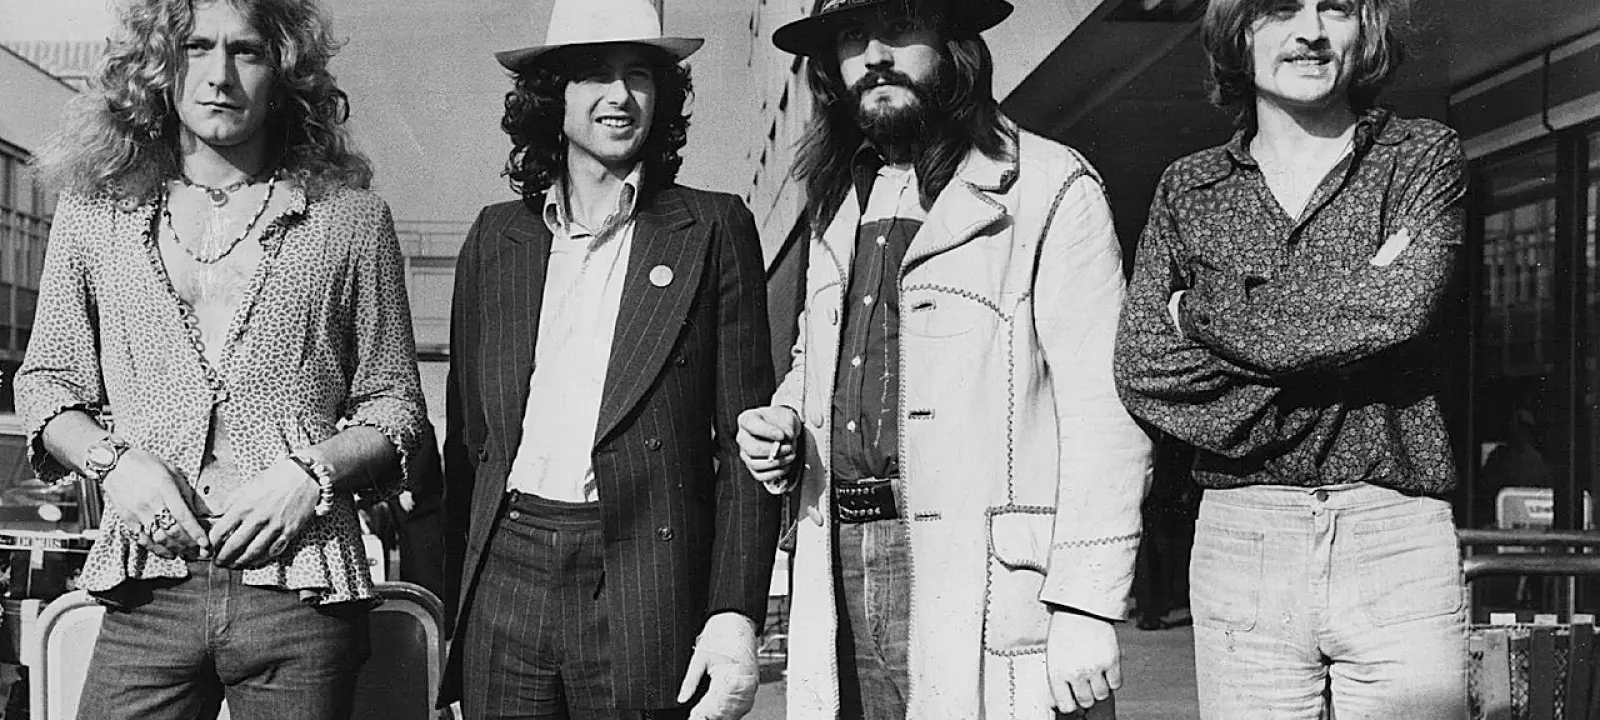 Led Zeppelin (Лед Зеппелин): Биография группы